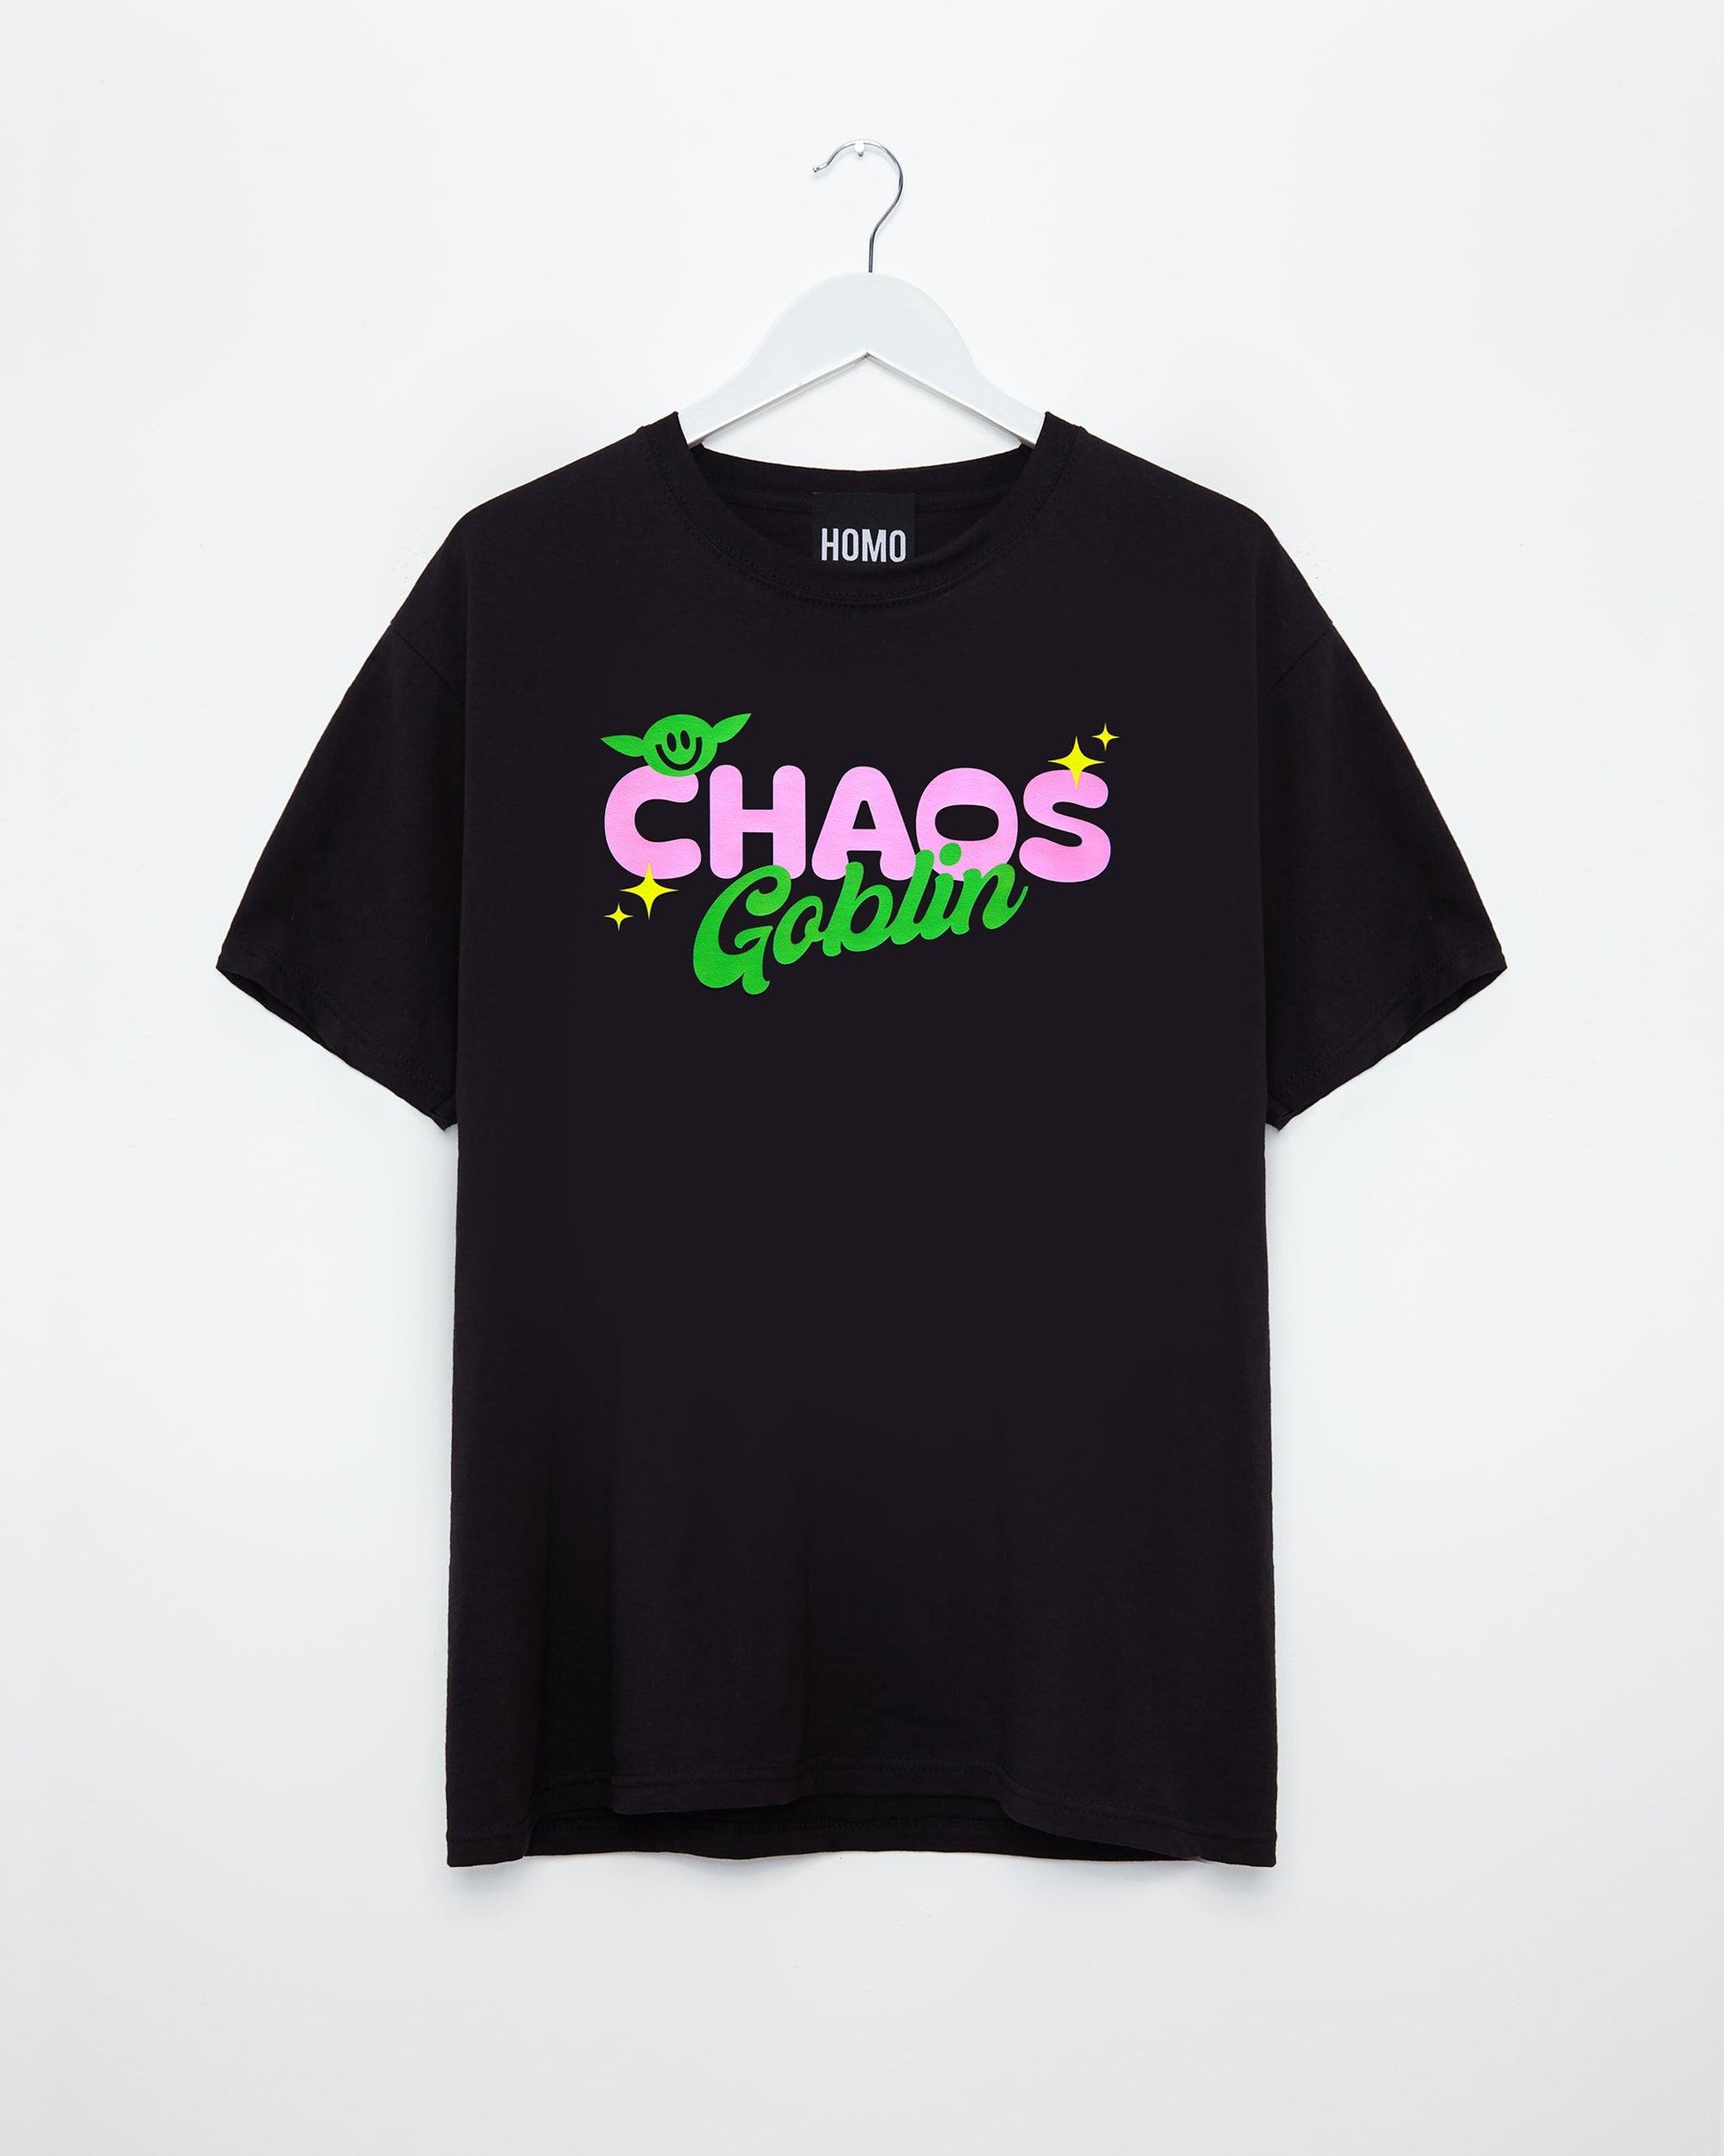 Chaos Goblin - mens tshirt - HOMOLONDON